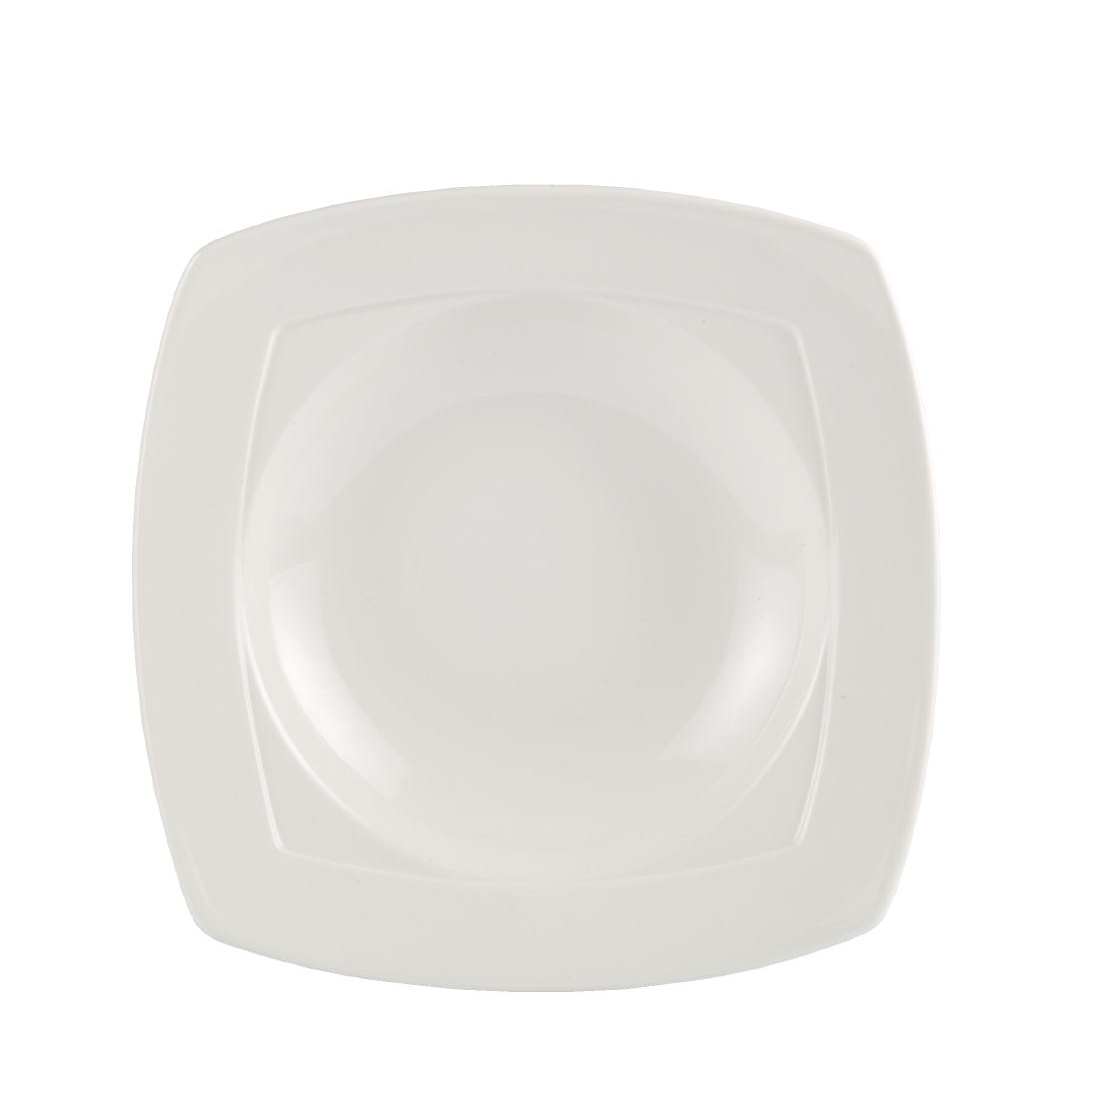 Steelite Simplicity White Harmony Square Bowls 230mm